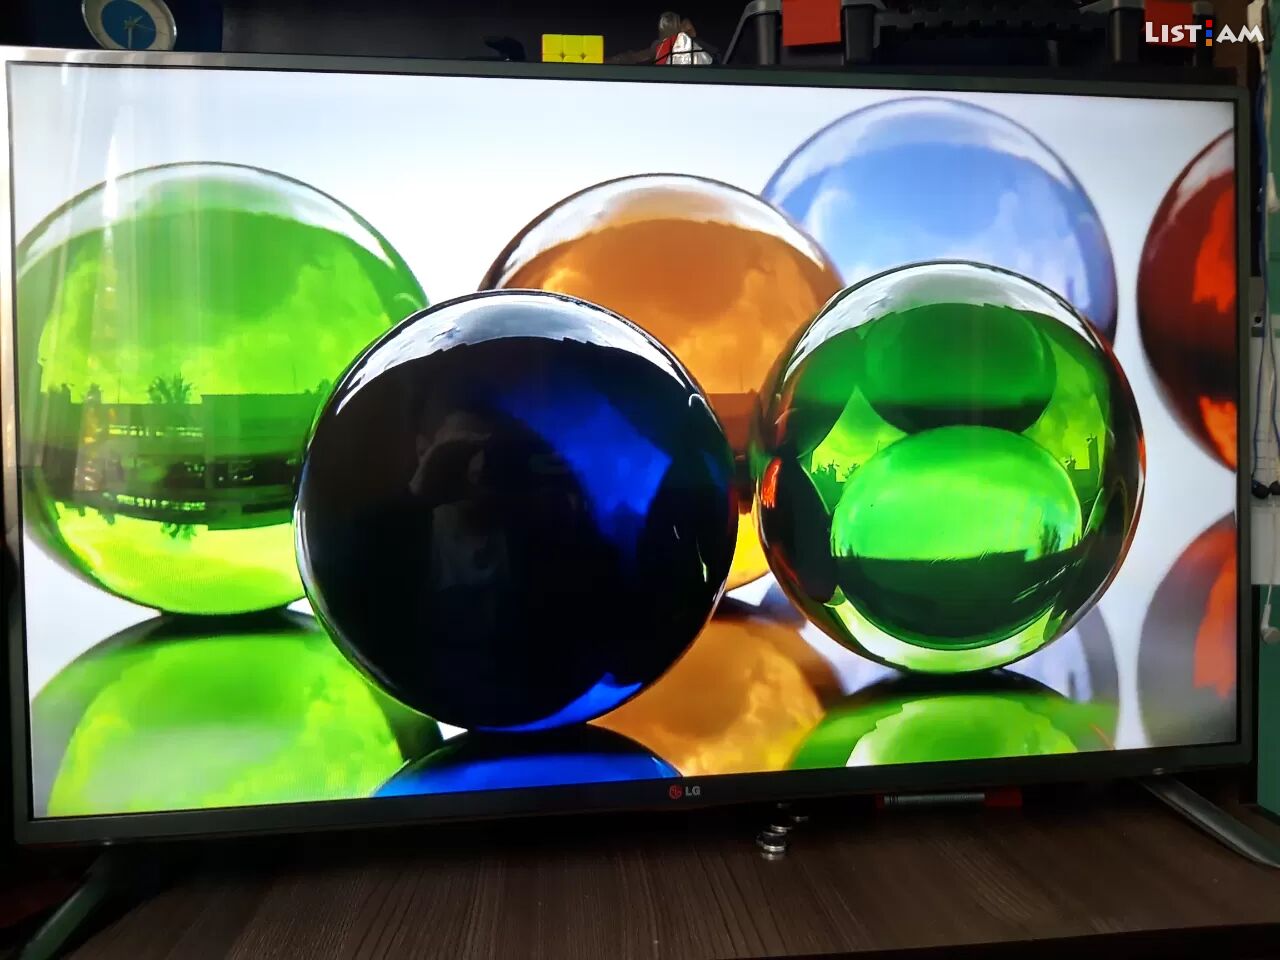 LG 3D Smart TV